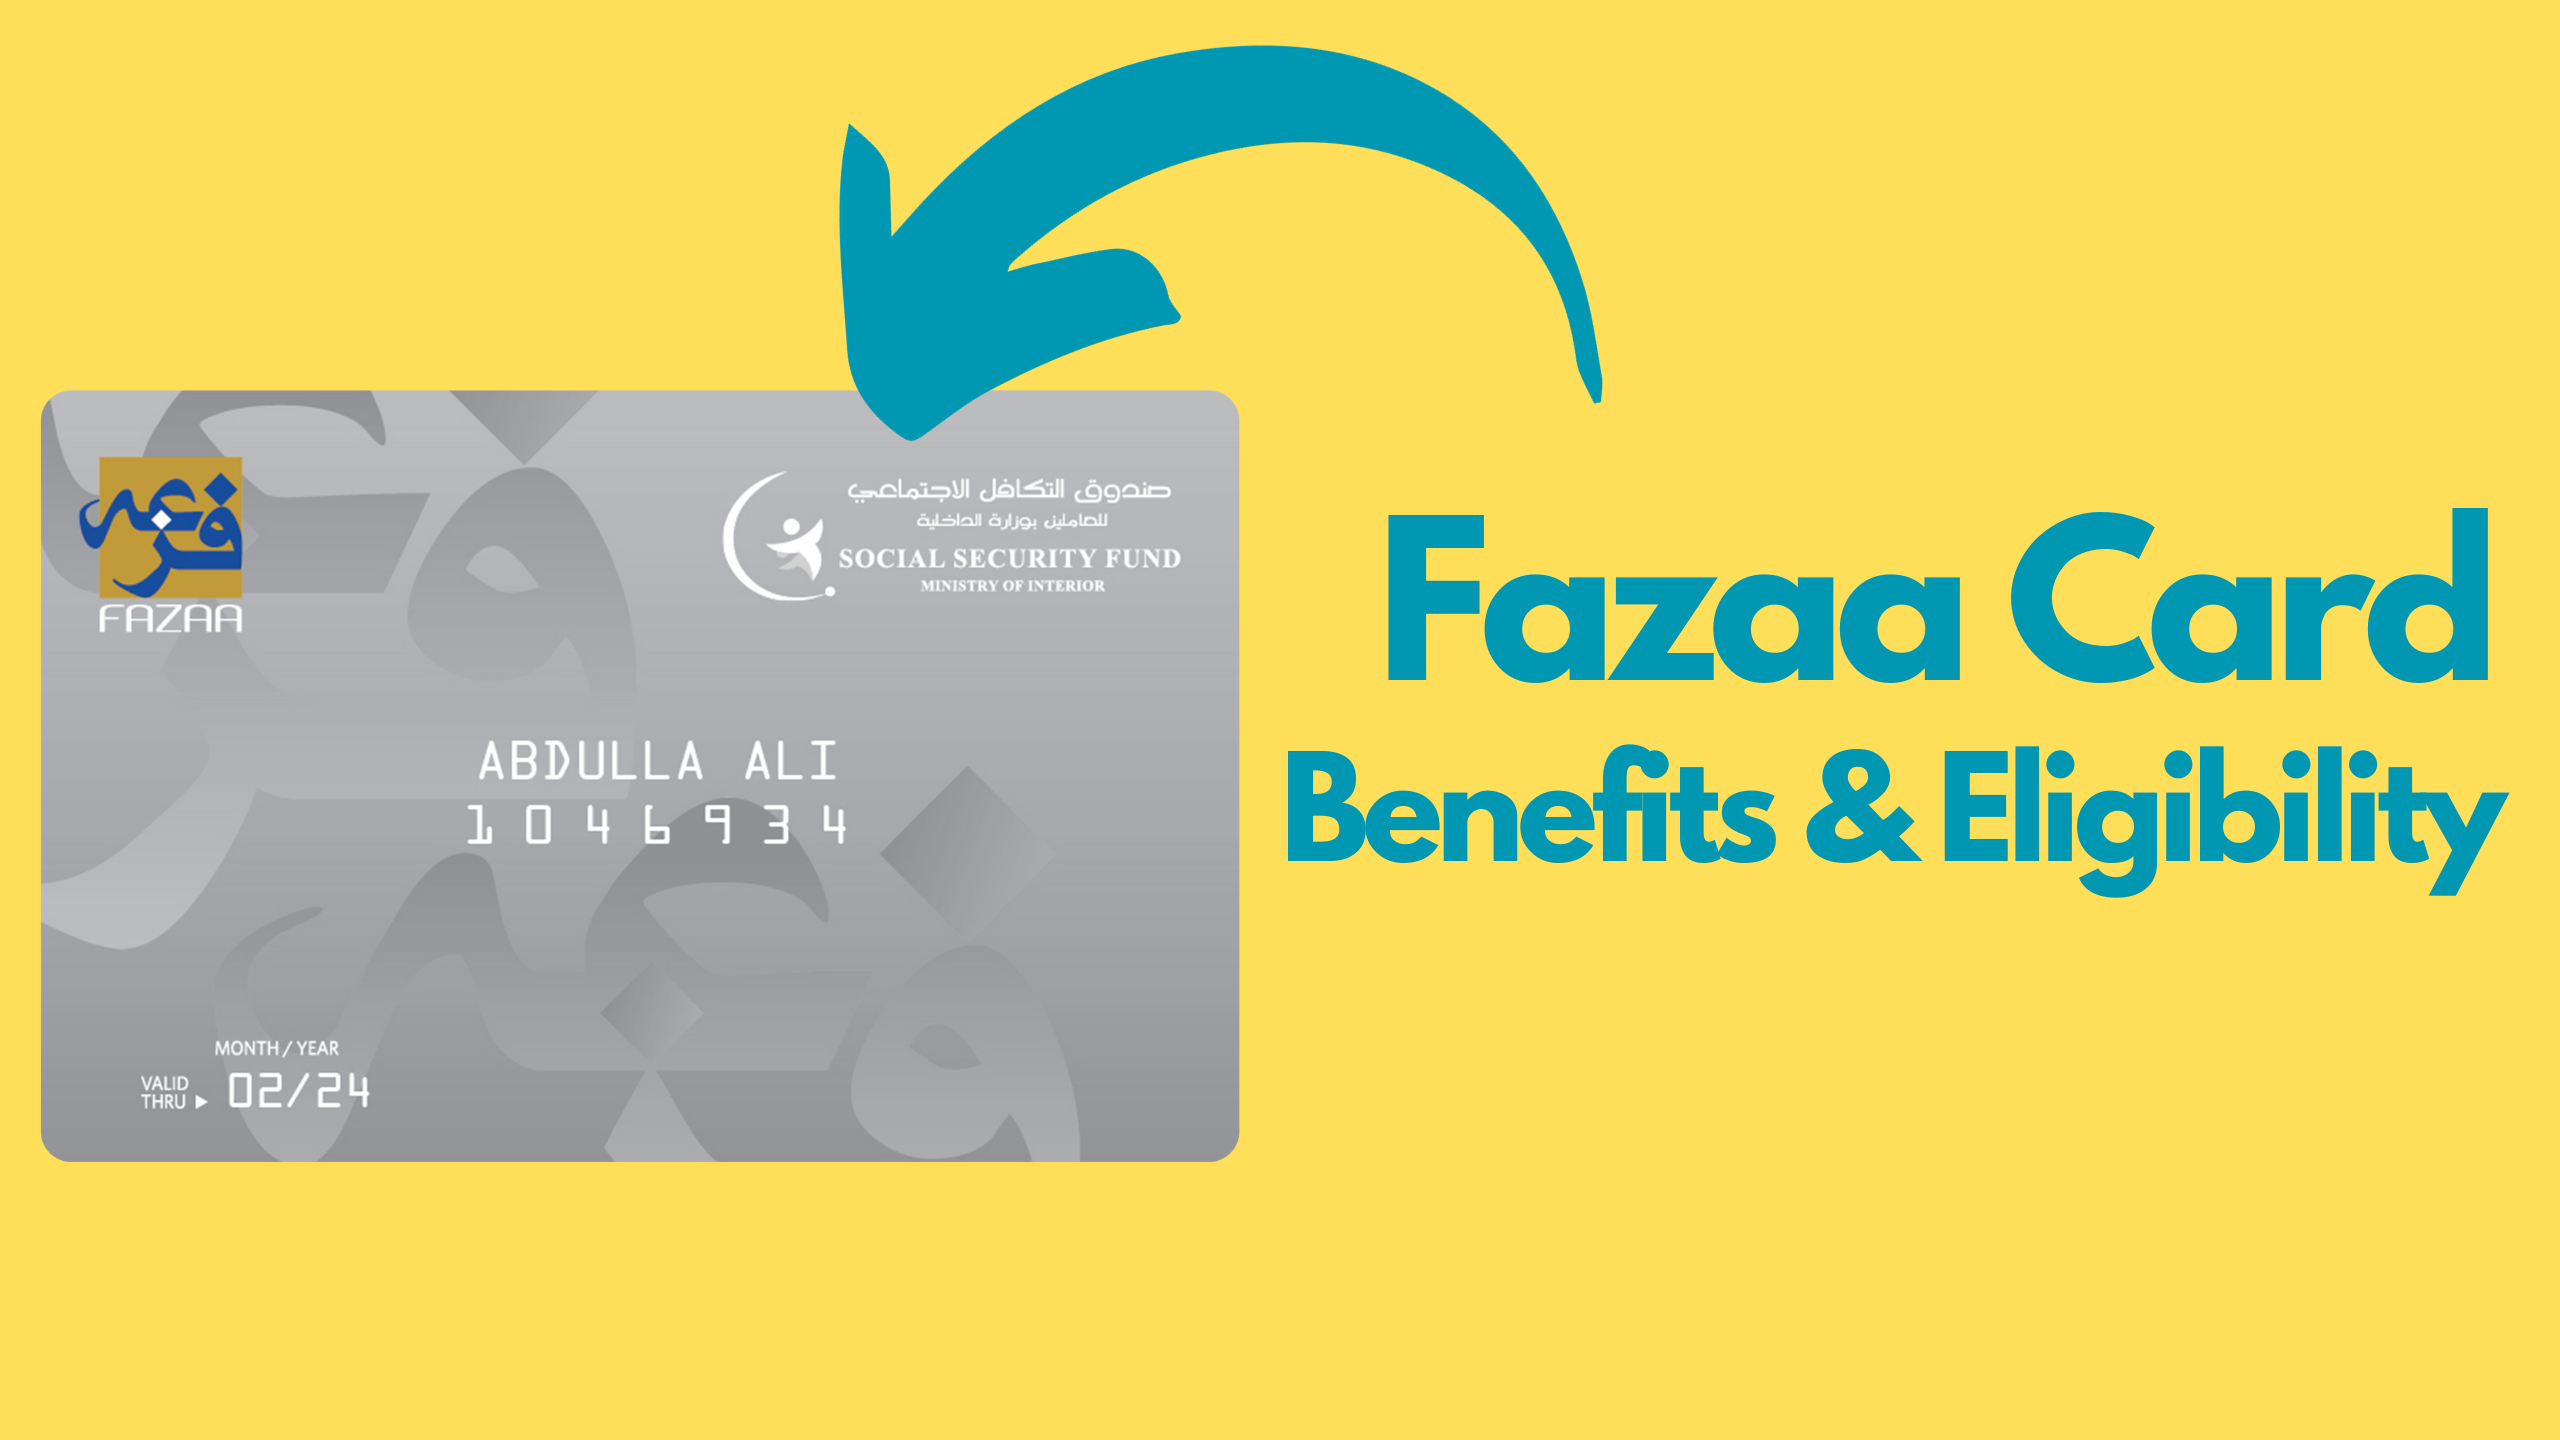 Fazaa Card Benefits And Eligibility